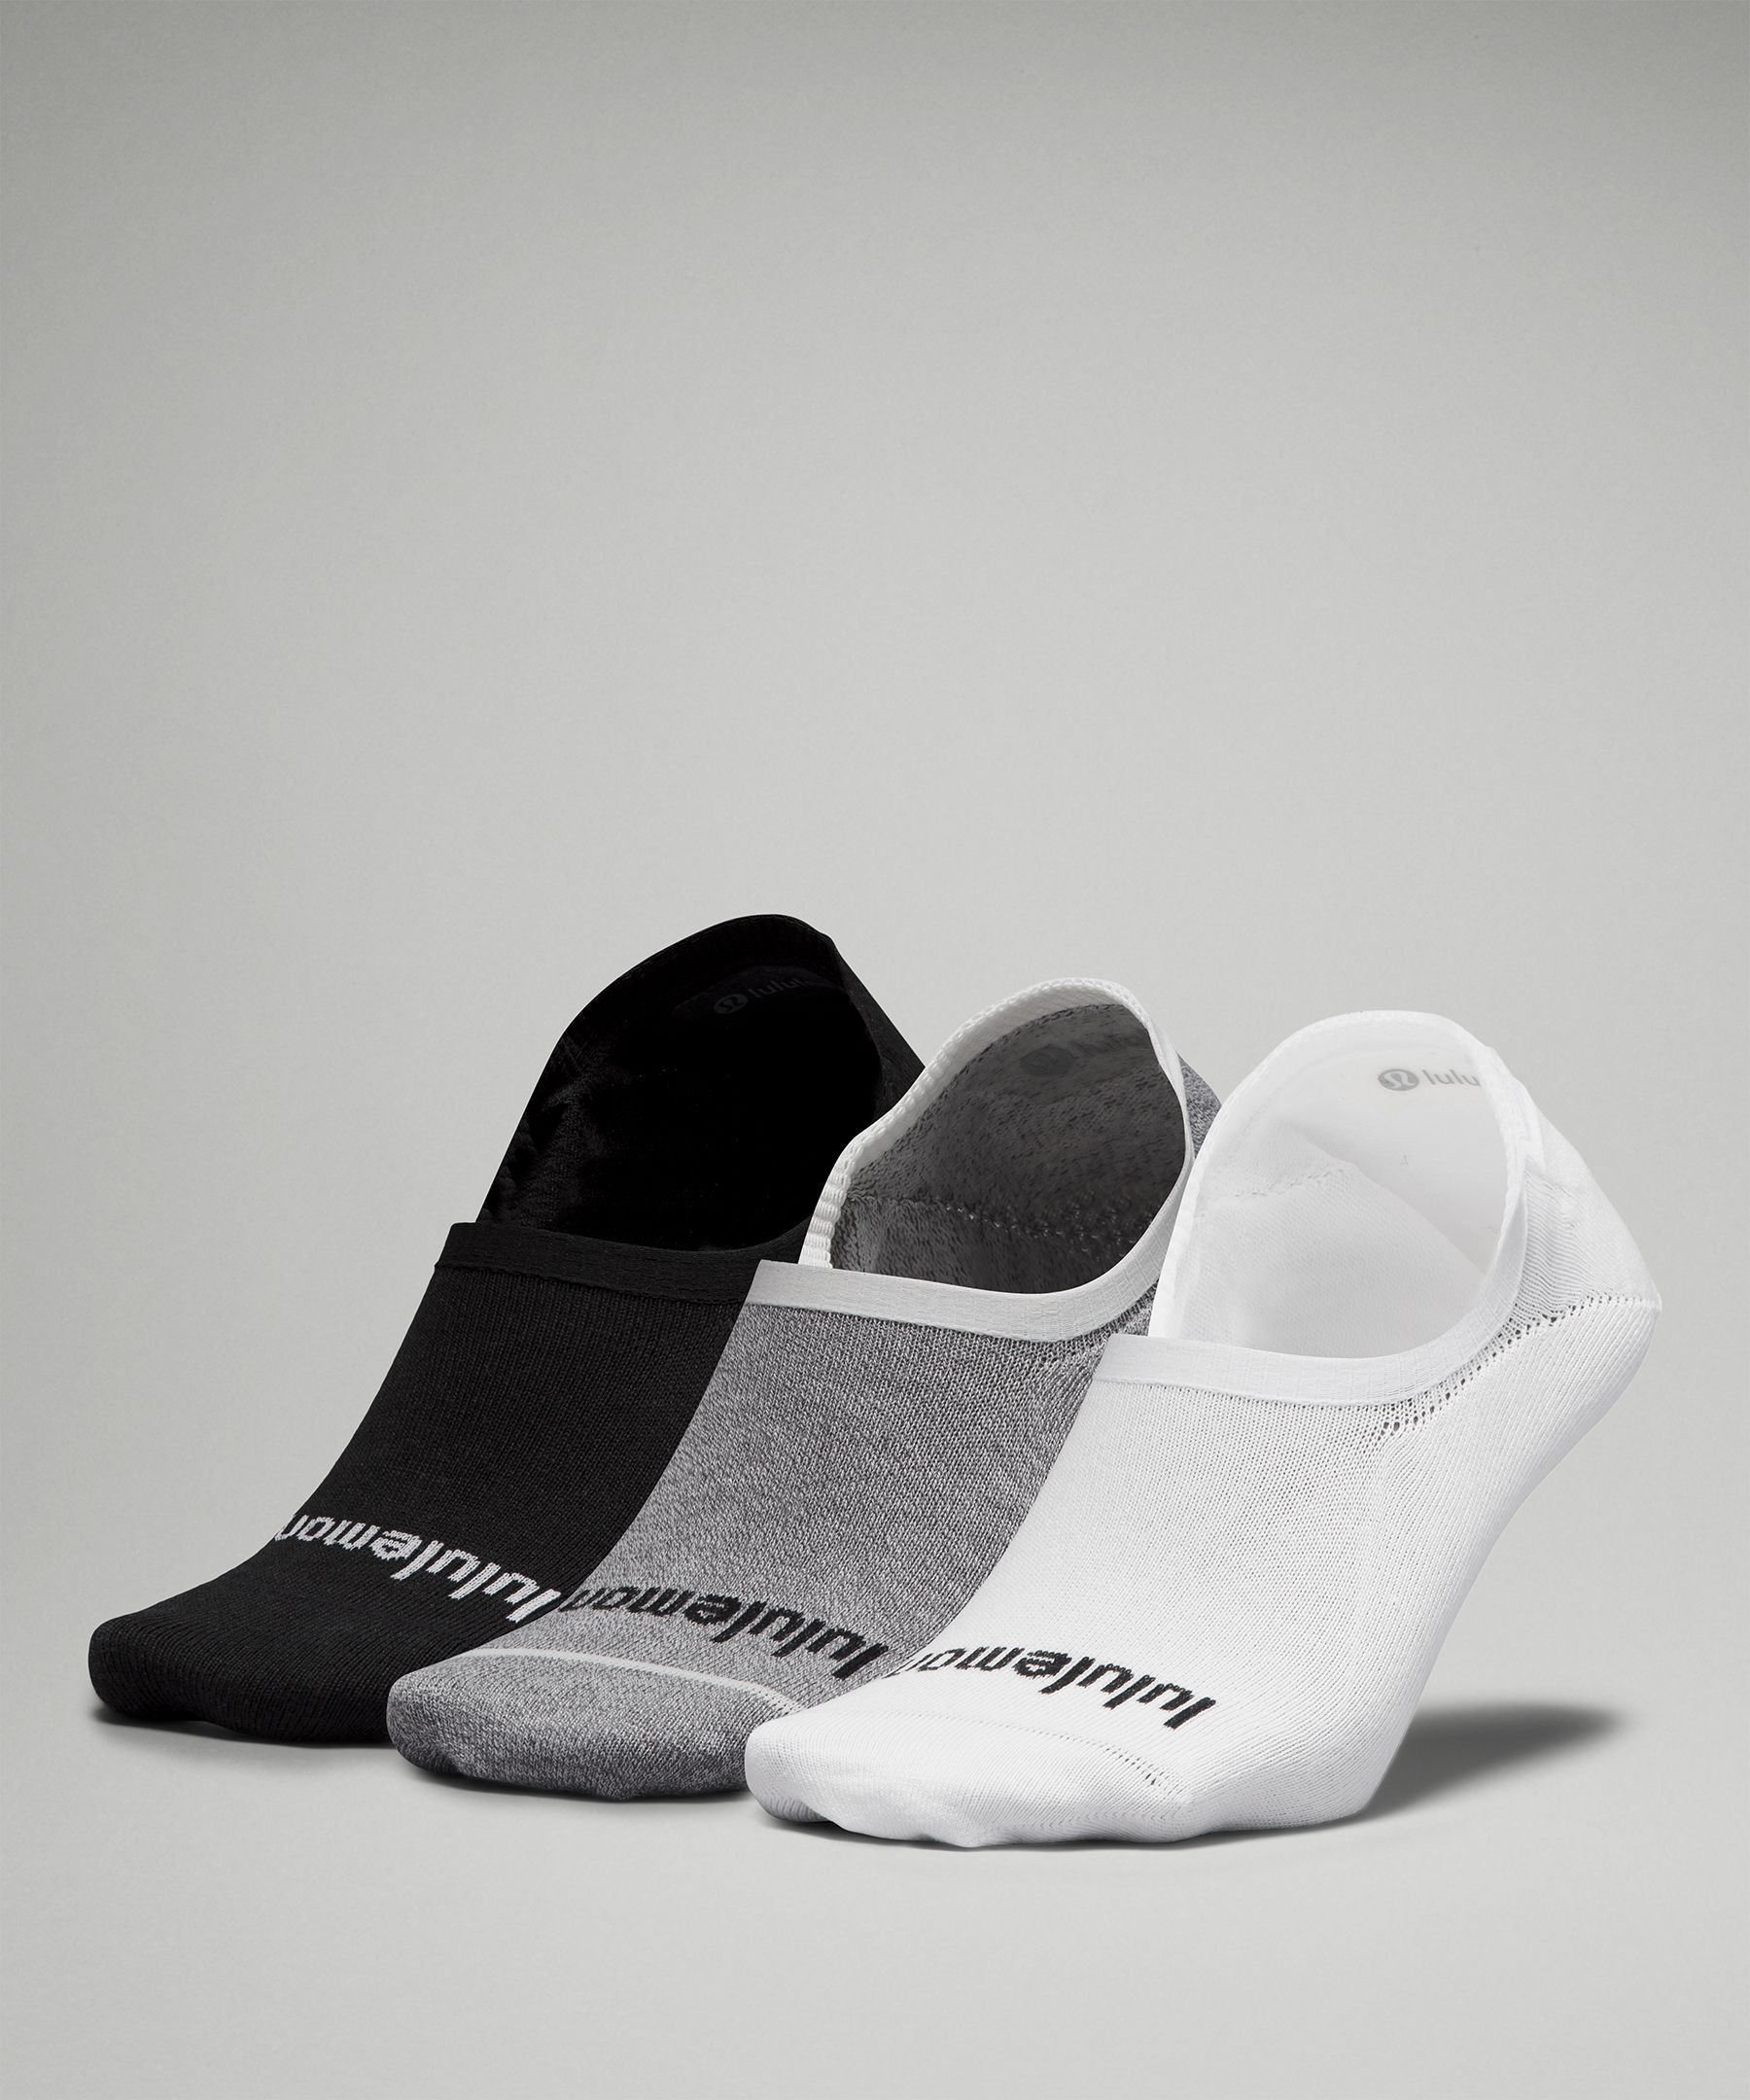 Lululemon Daily Stride Comfort No-show Socks 3 Pack